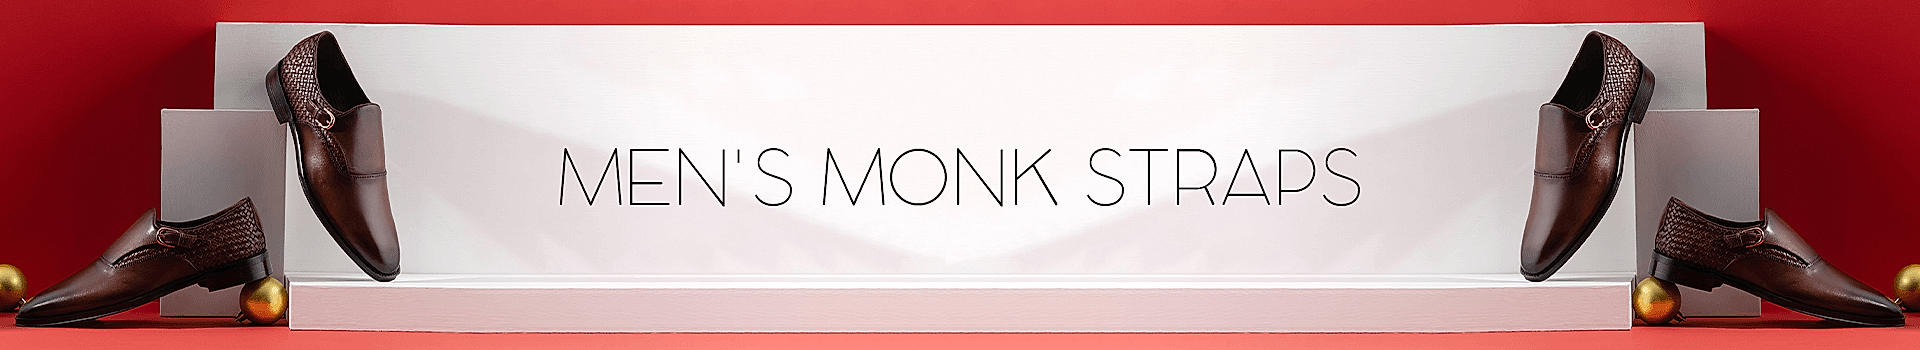 Monk Straps